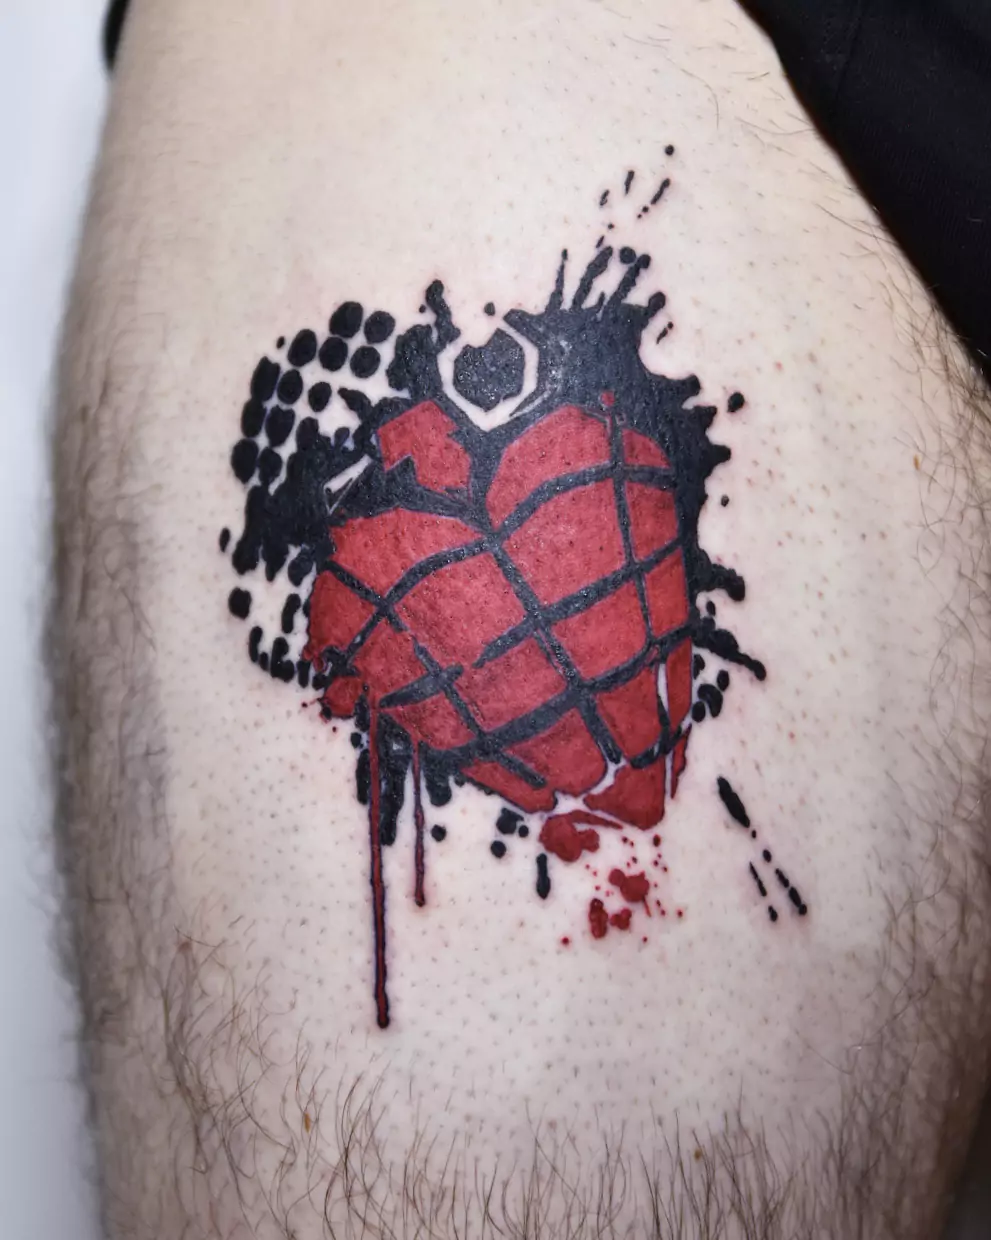 Green Day grenade tattoo